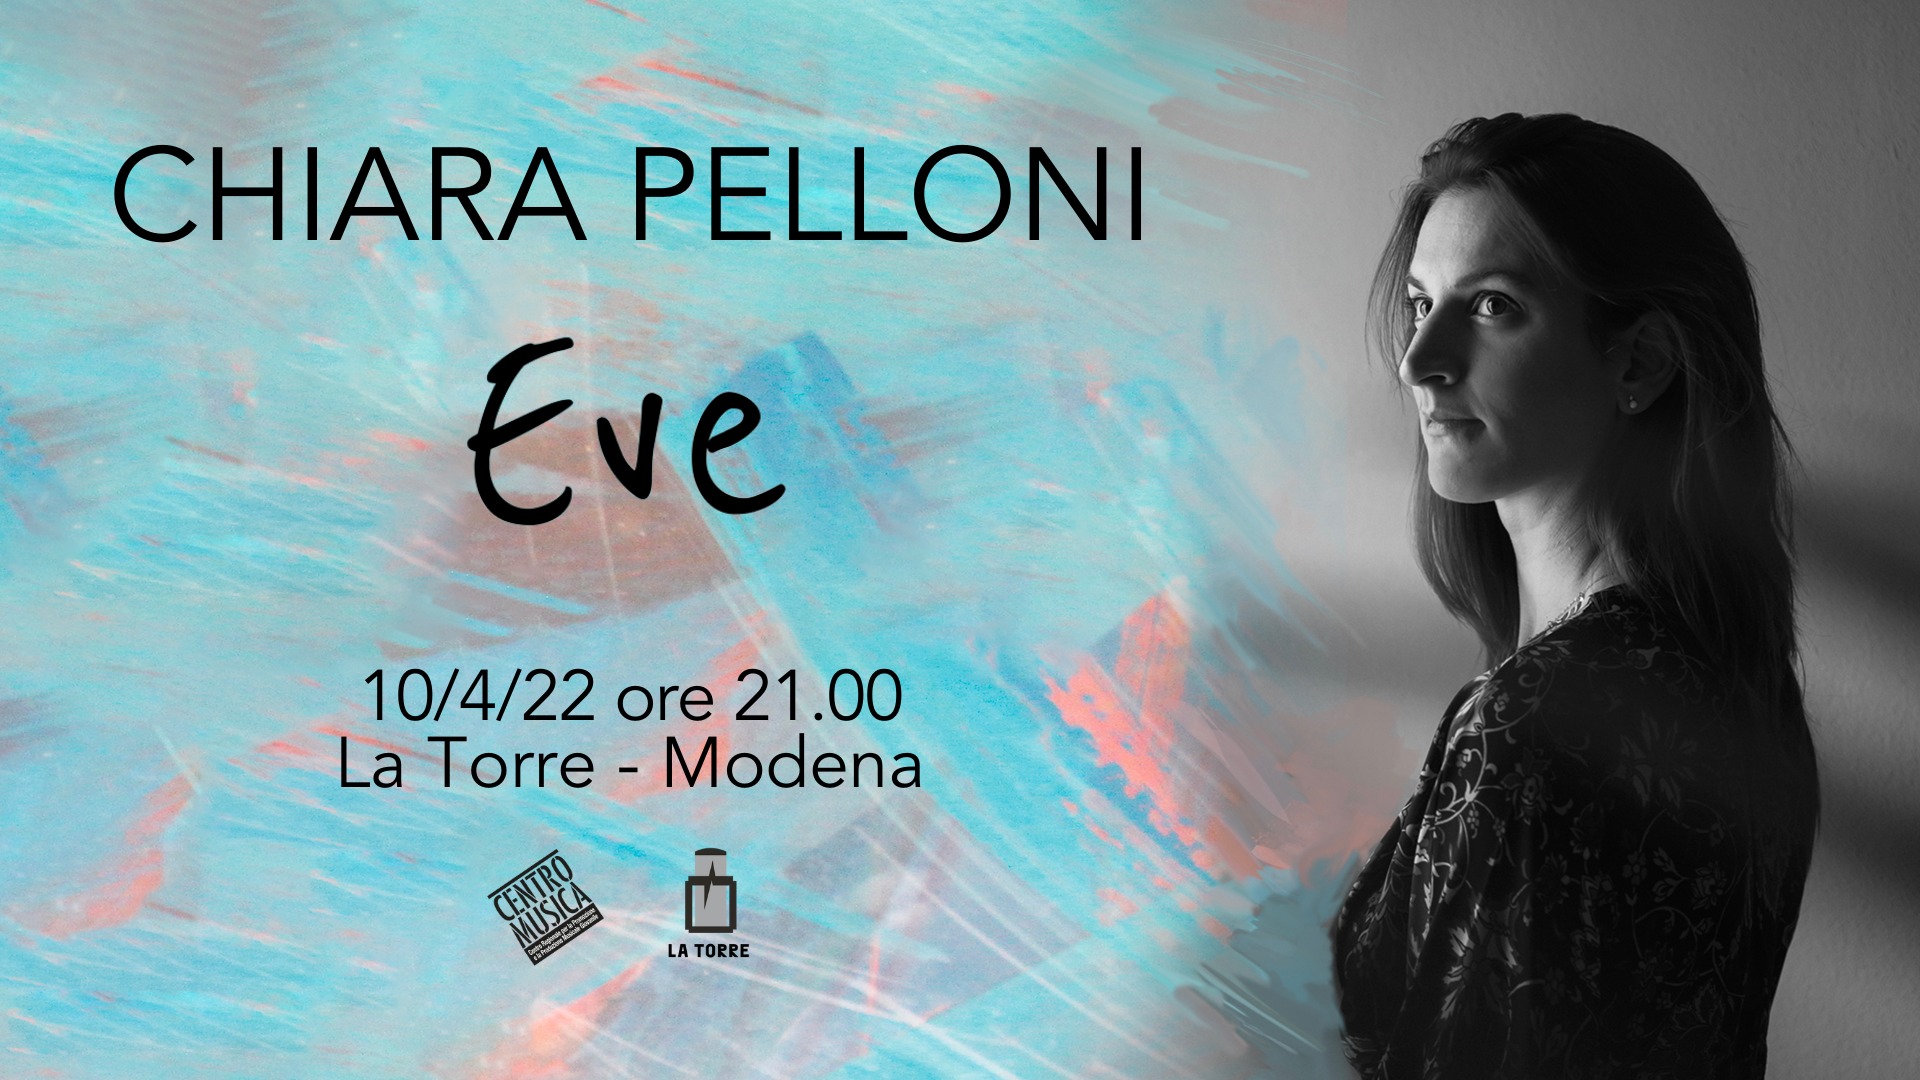 Chiara Pelloni "Eve"- La Torre, 10 aprile